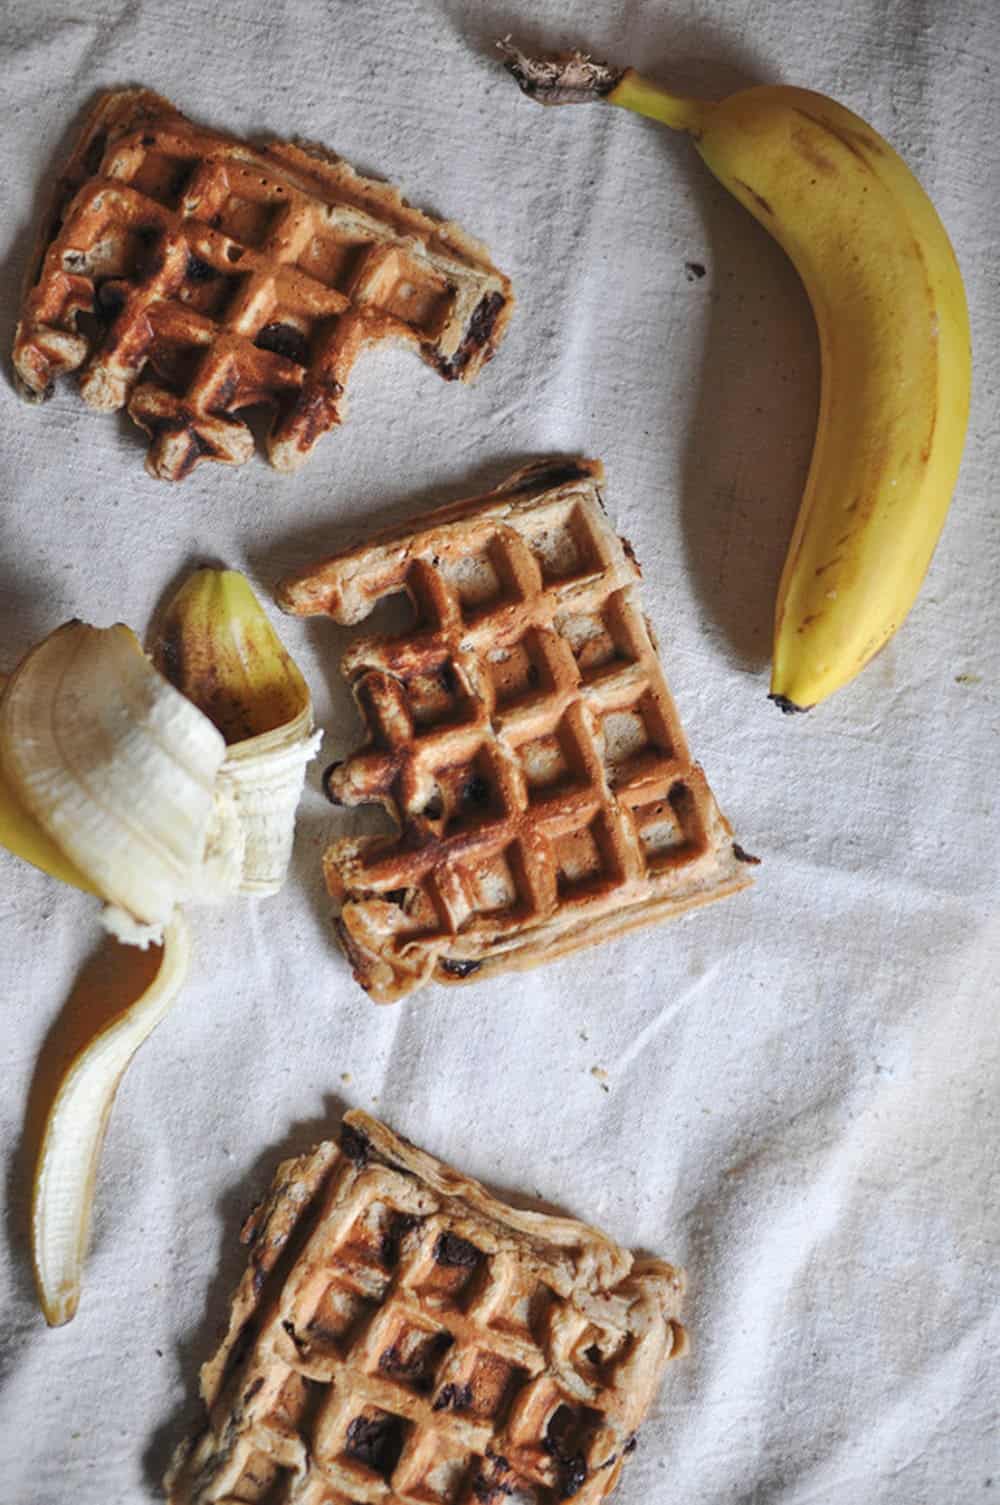 Peanut butter banana waffles